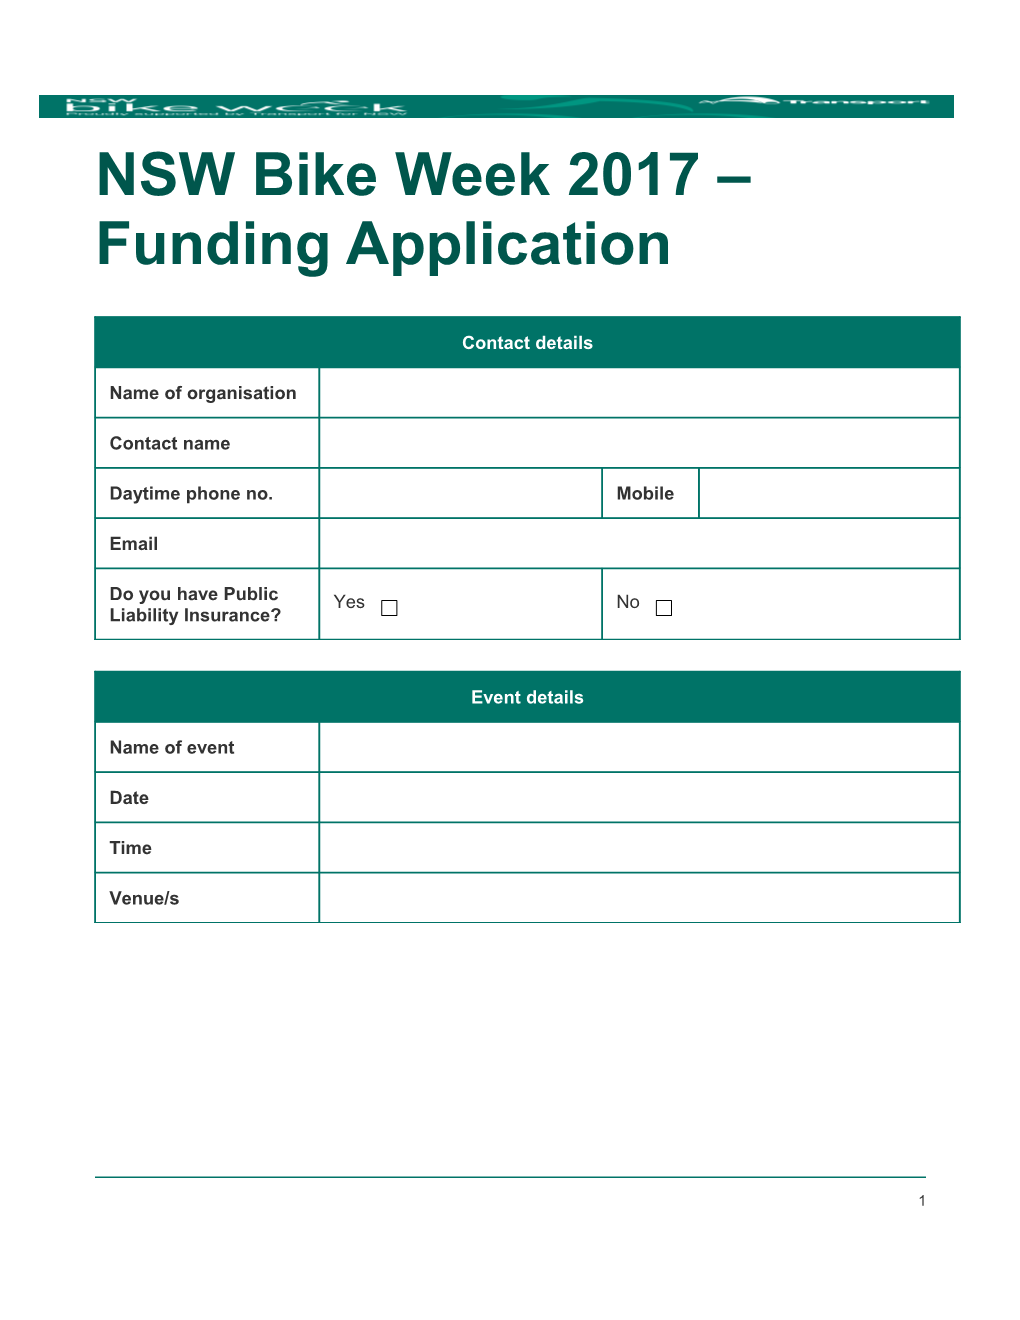 NSW Bike Week 2017 Funding Application